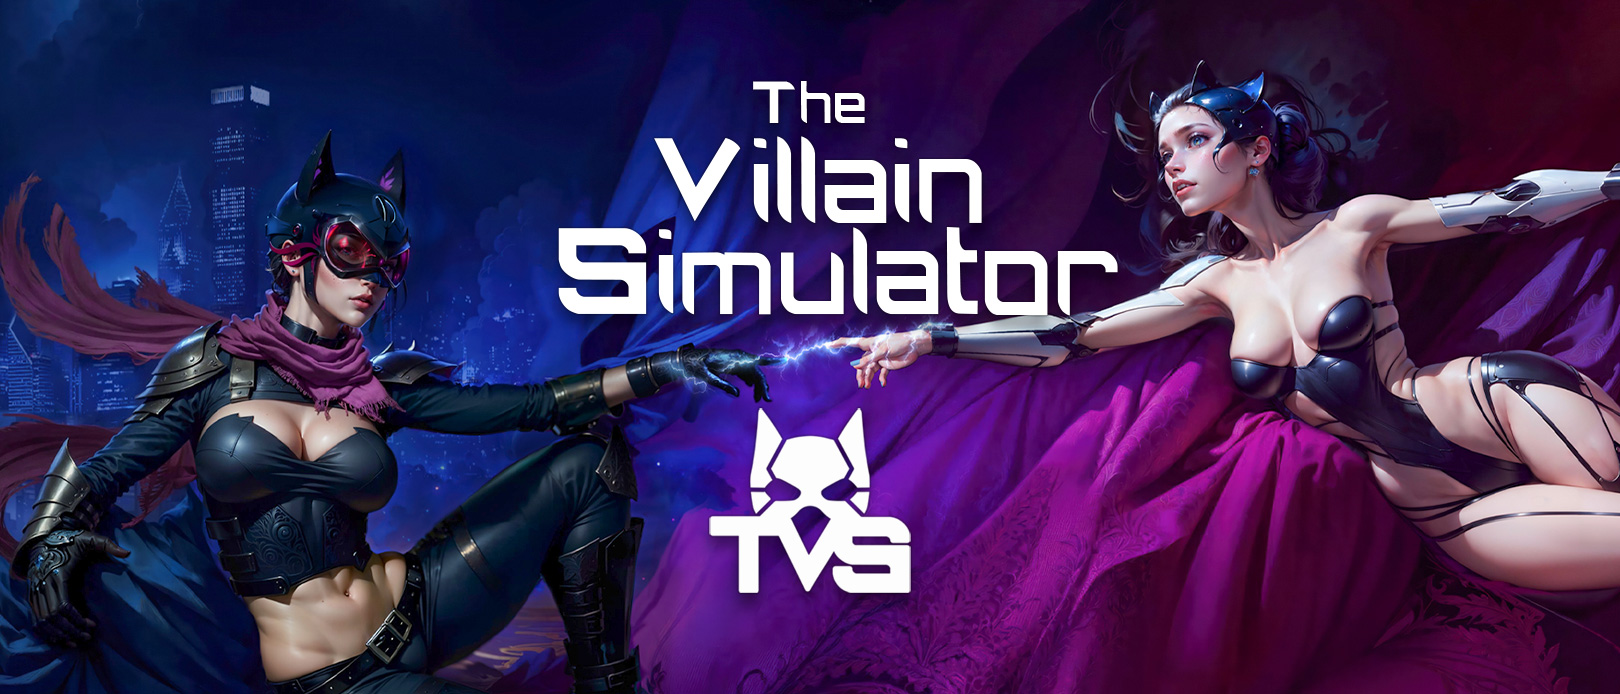 The Villain Simulator